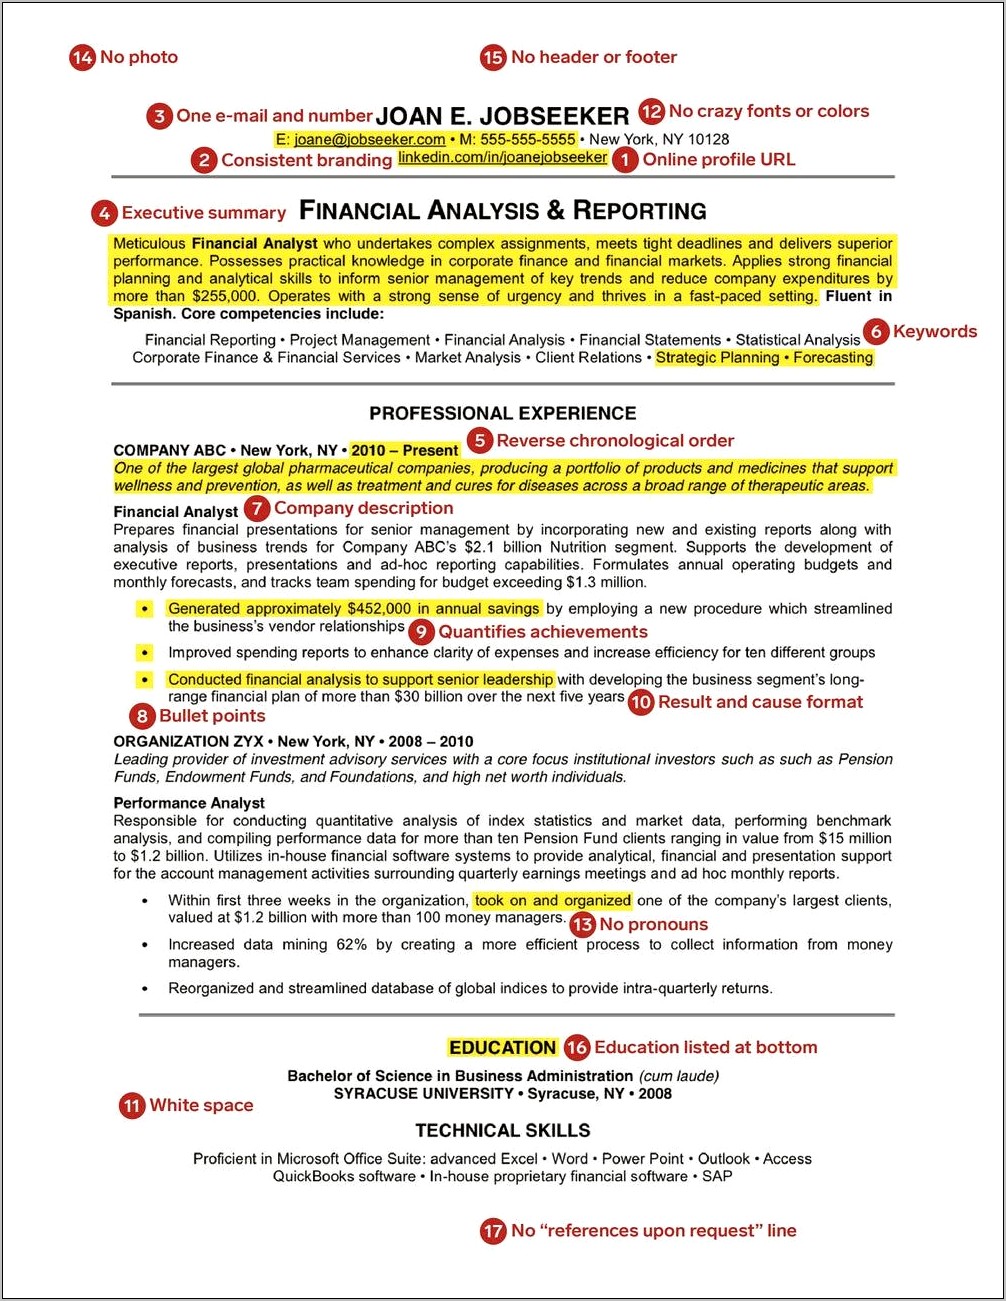 Profile Summary On Resume Entry Level Healthcare